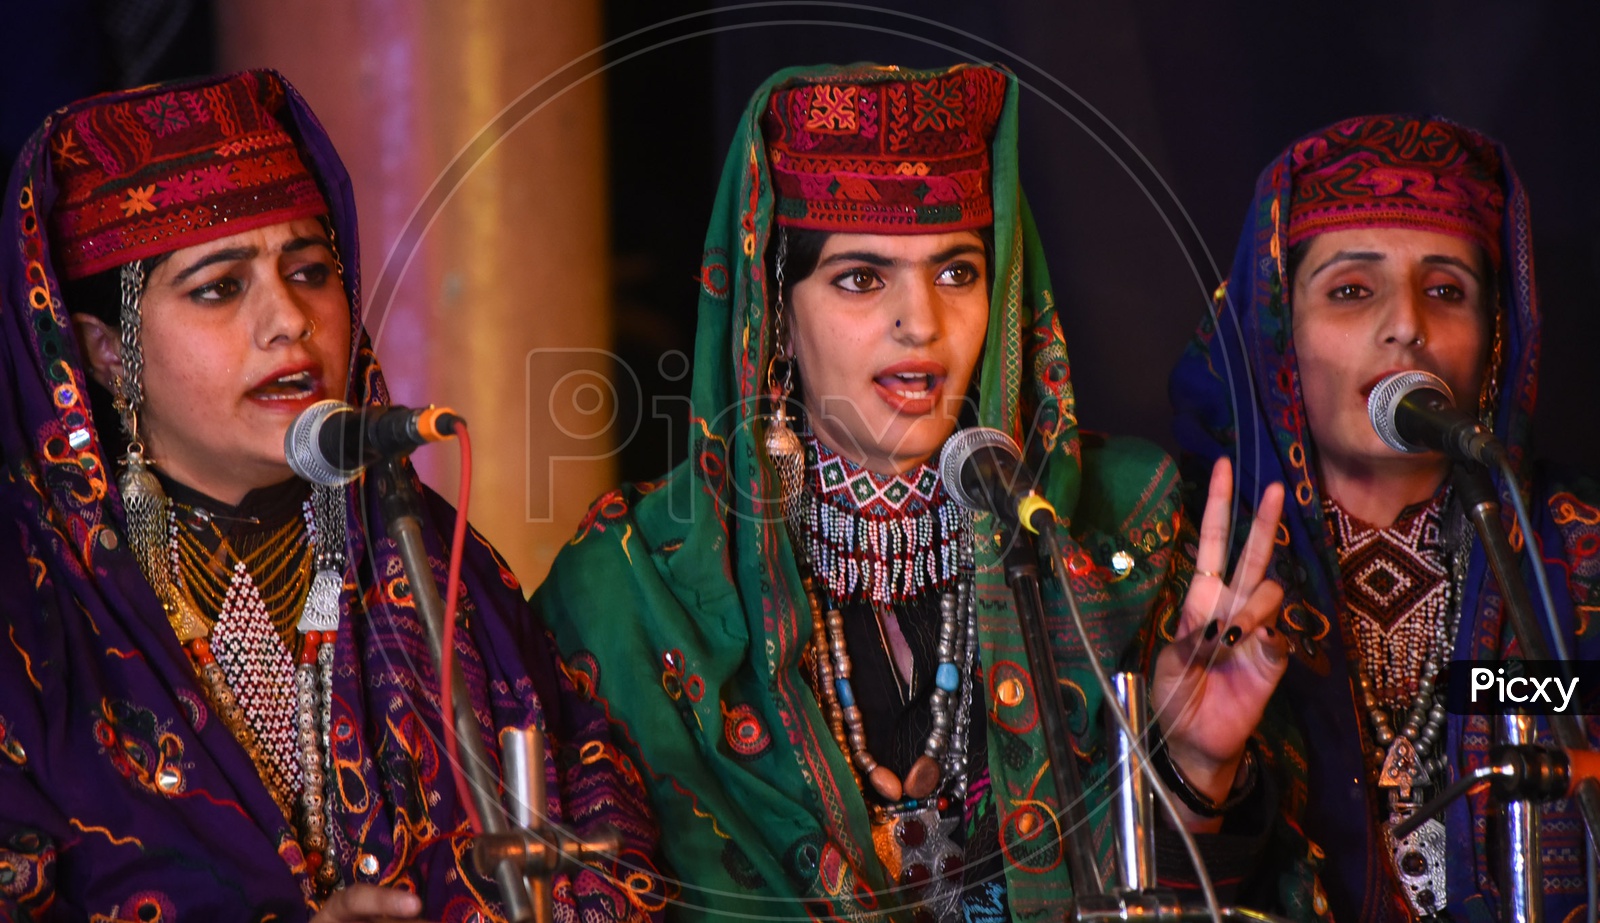 Kashmiri Women singing on the stage